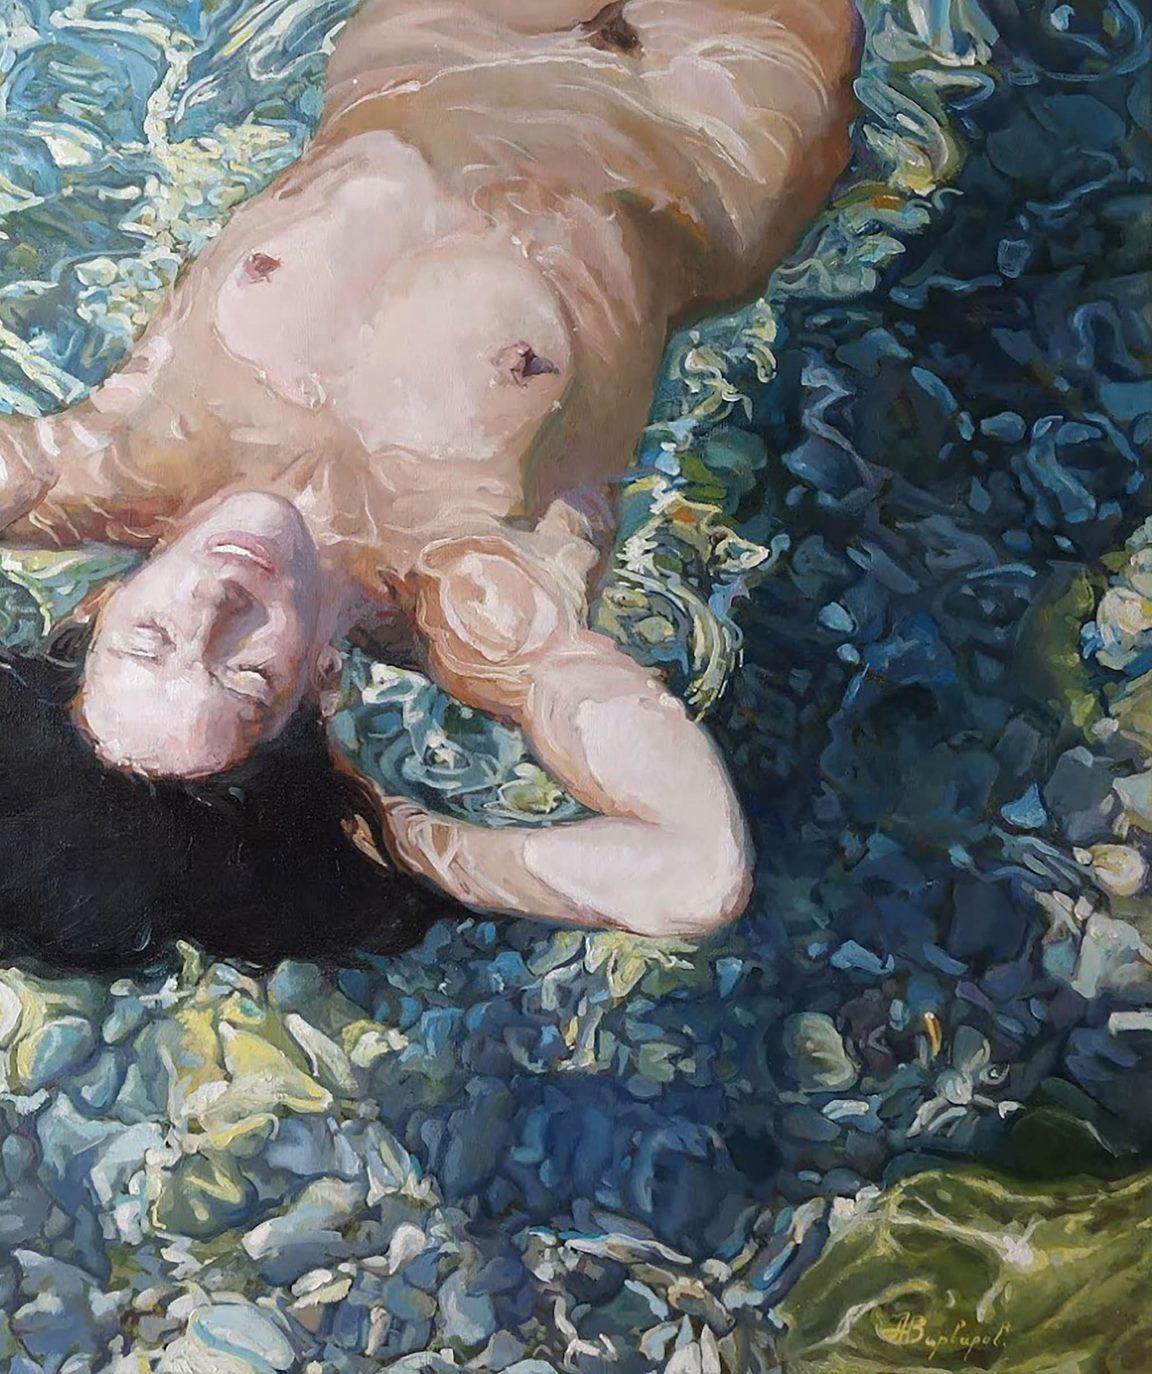 Happy, Nude, Contemporary art, Figurative, Original oil Painting, One of a Kind - Gray Nude Painting by Anatoly Varvarov Viktorovich